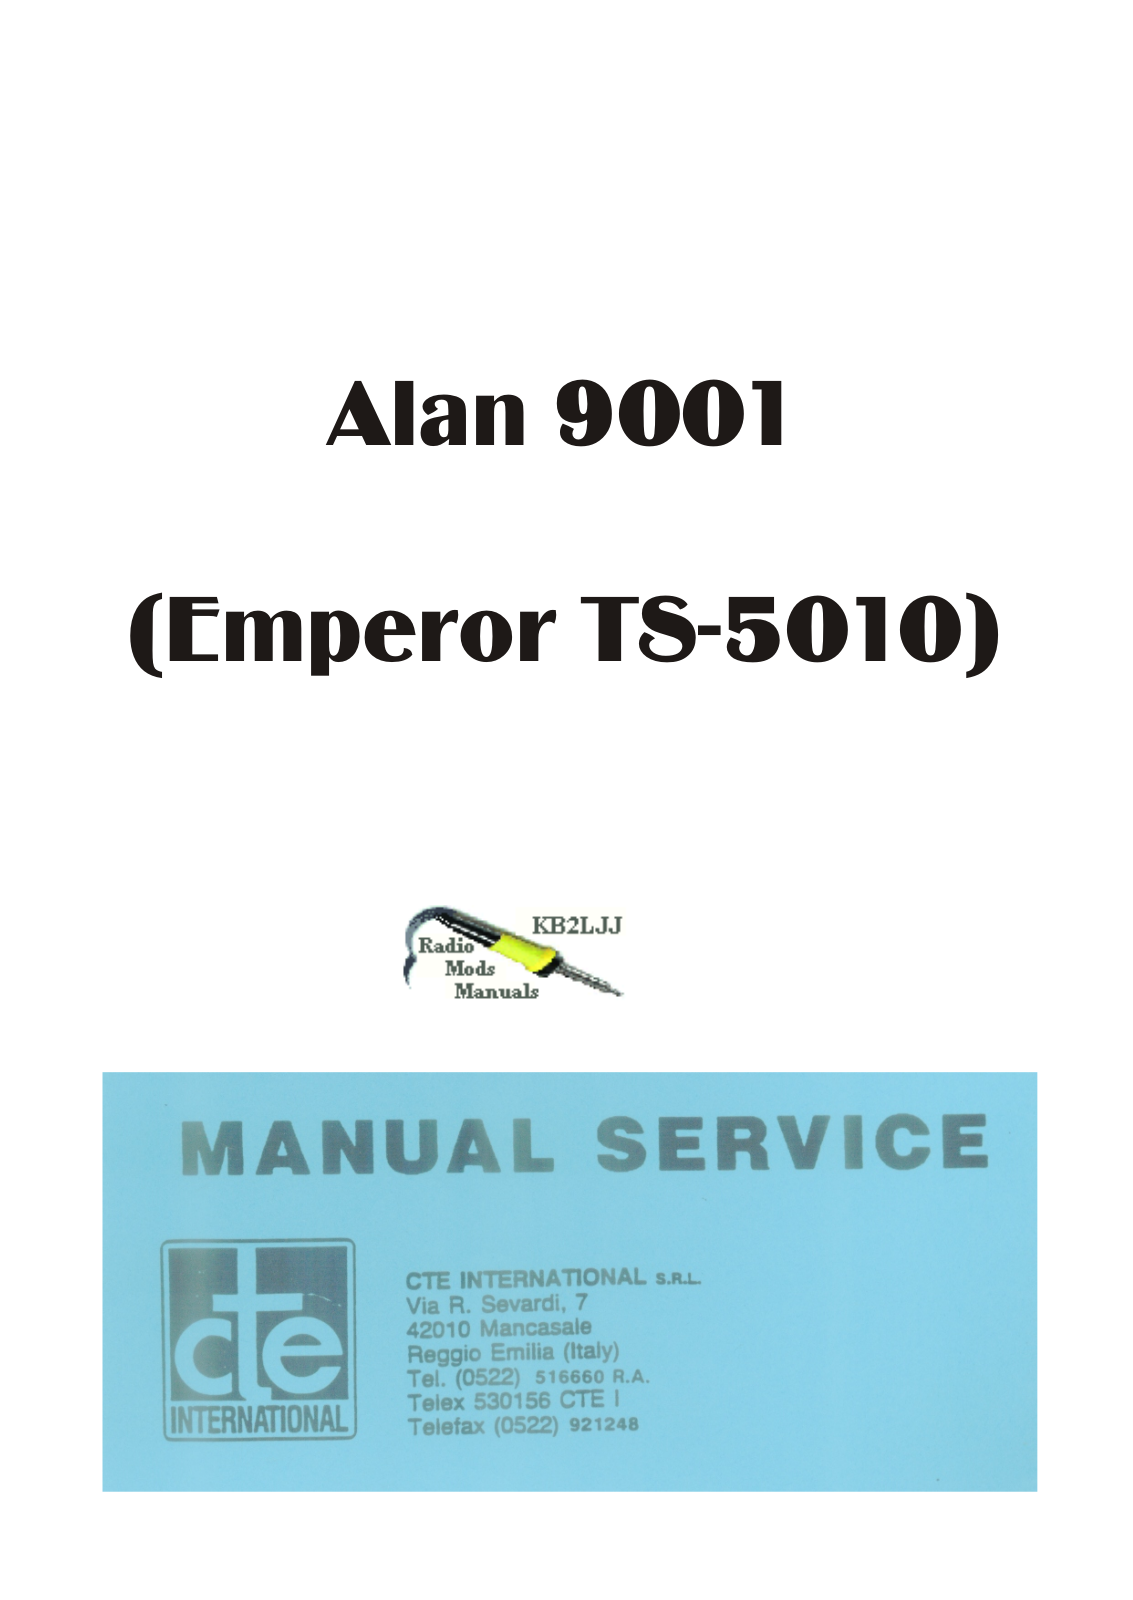 Alan 9001 User Manual